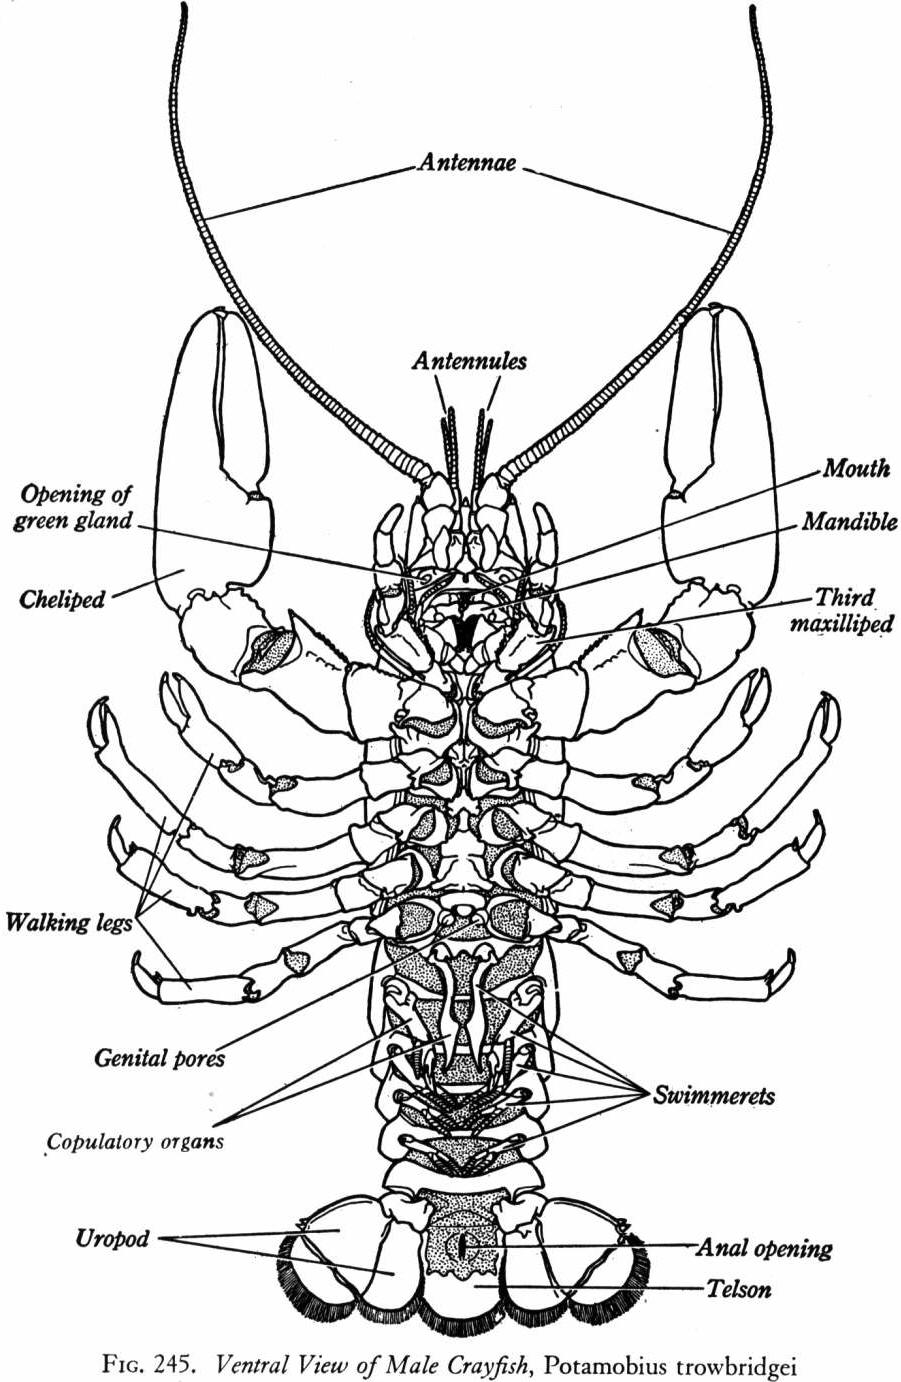 crayfish-dissection-lab-companion-classical-conversations-homeschool-homeschool-life-science